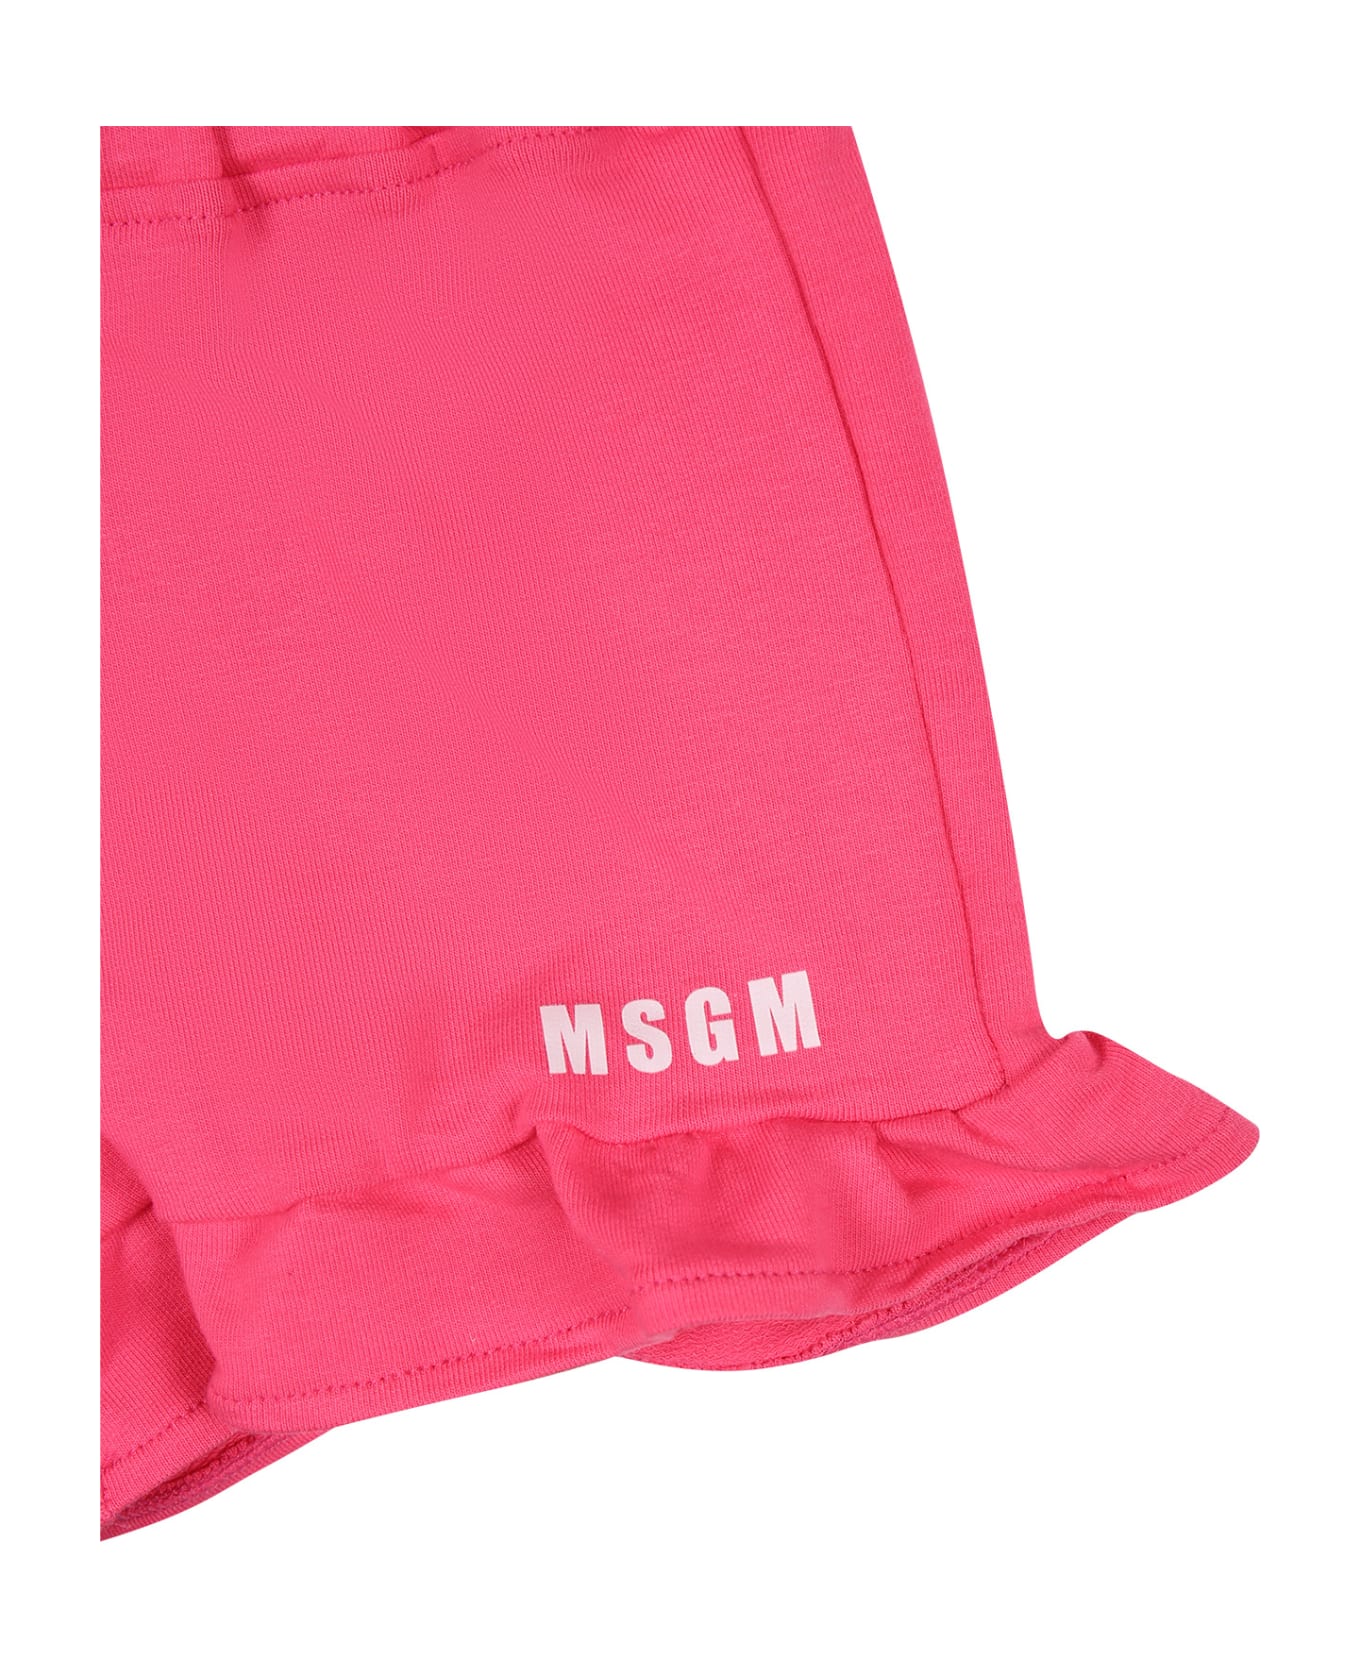 MSGM Fuchsia Set For Baby Girl With Logo - Fuchsia ボトムス